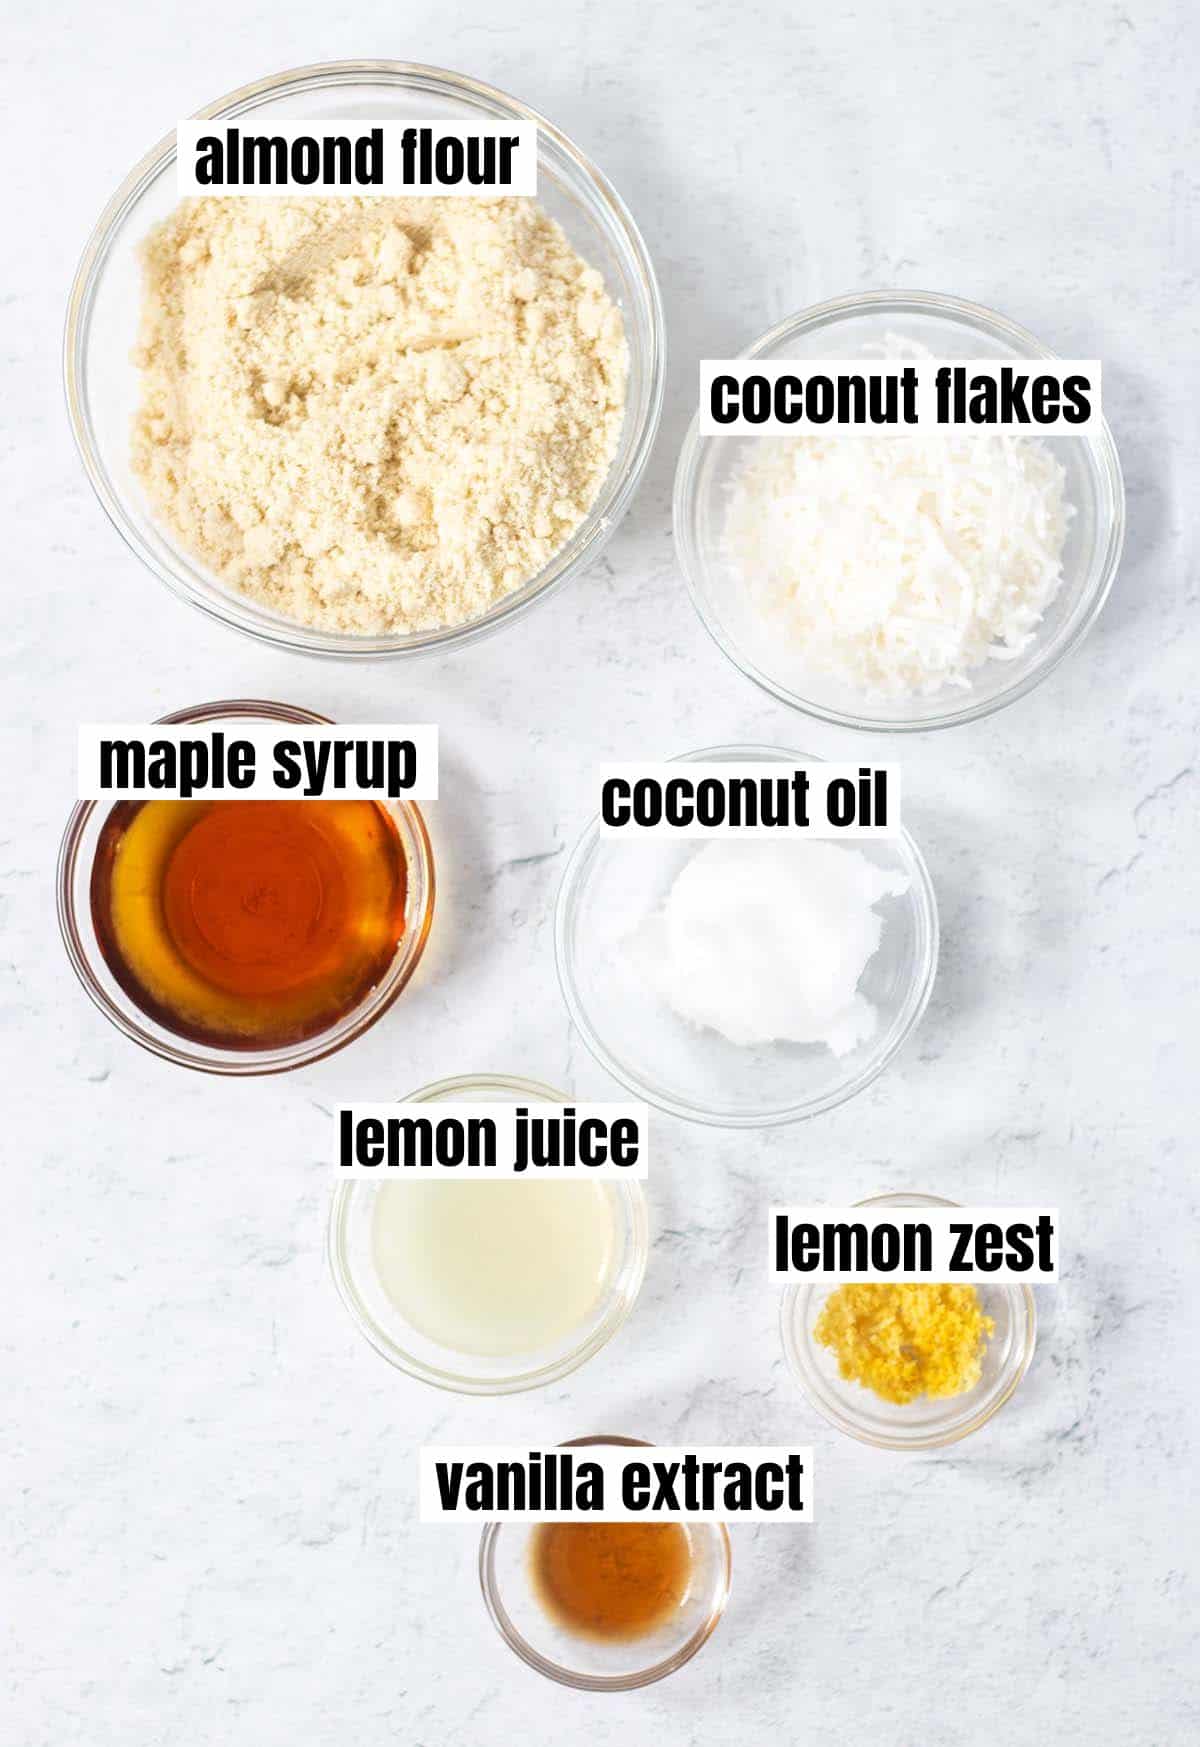 ingredients used in soft lemon cookies including almond flour, coconut flakes, maple syrup, coconut oil, lemon juice, lemon zest, vanilla extract.